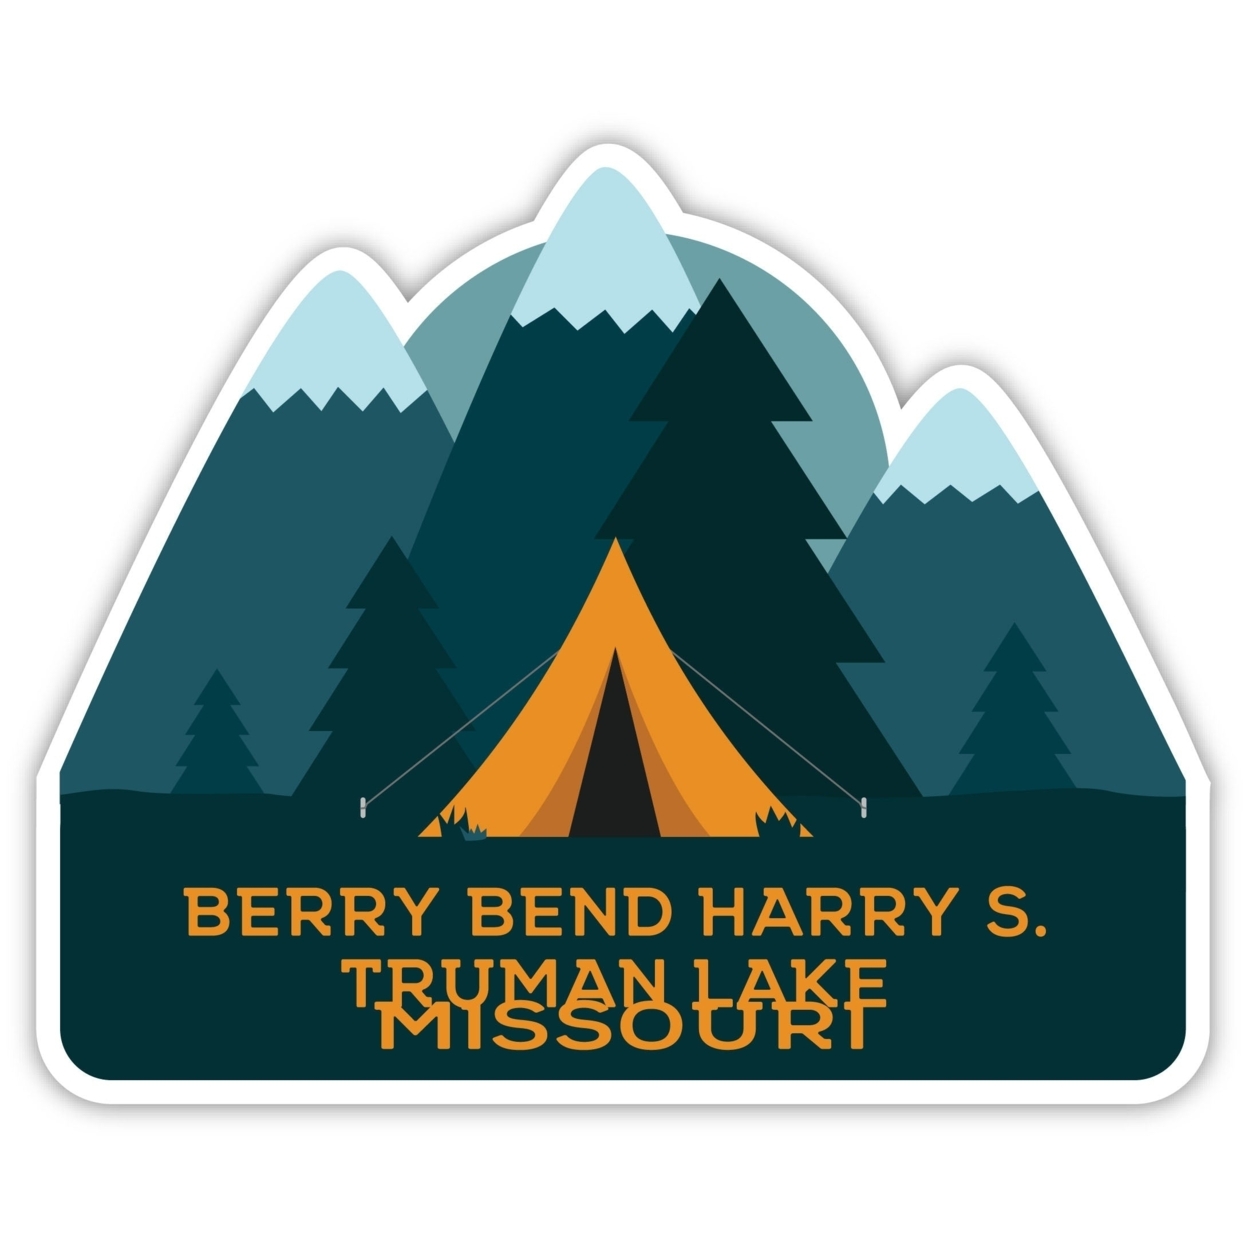 Berry Bend Harry S. Truman Lake Missouri Souvenir Decorative Stickers (Choose Theme And Size) - Single Unit, 8-Inch, Tent